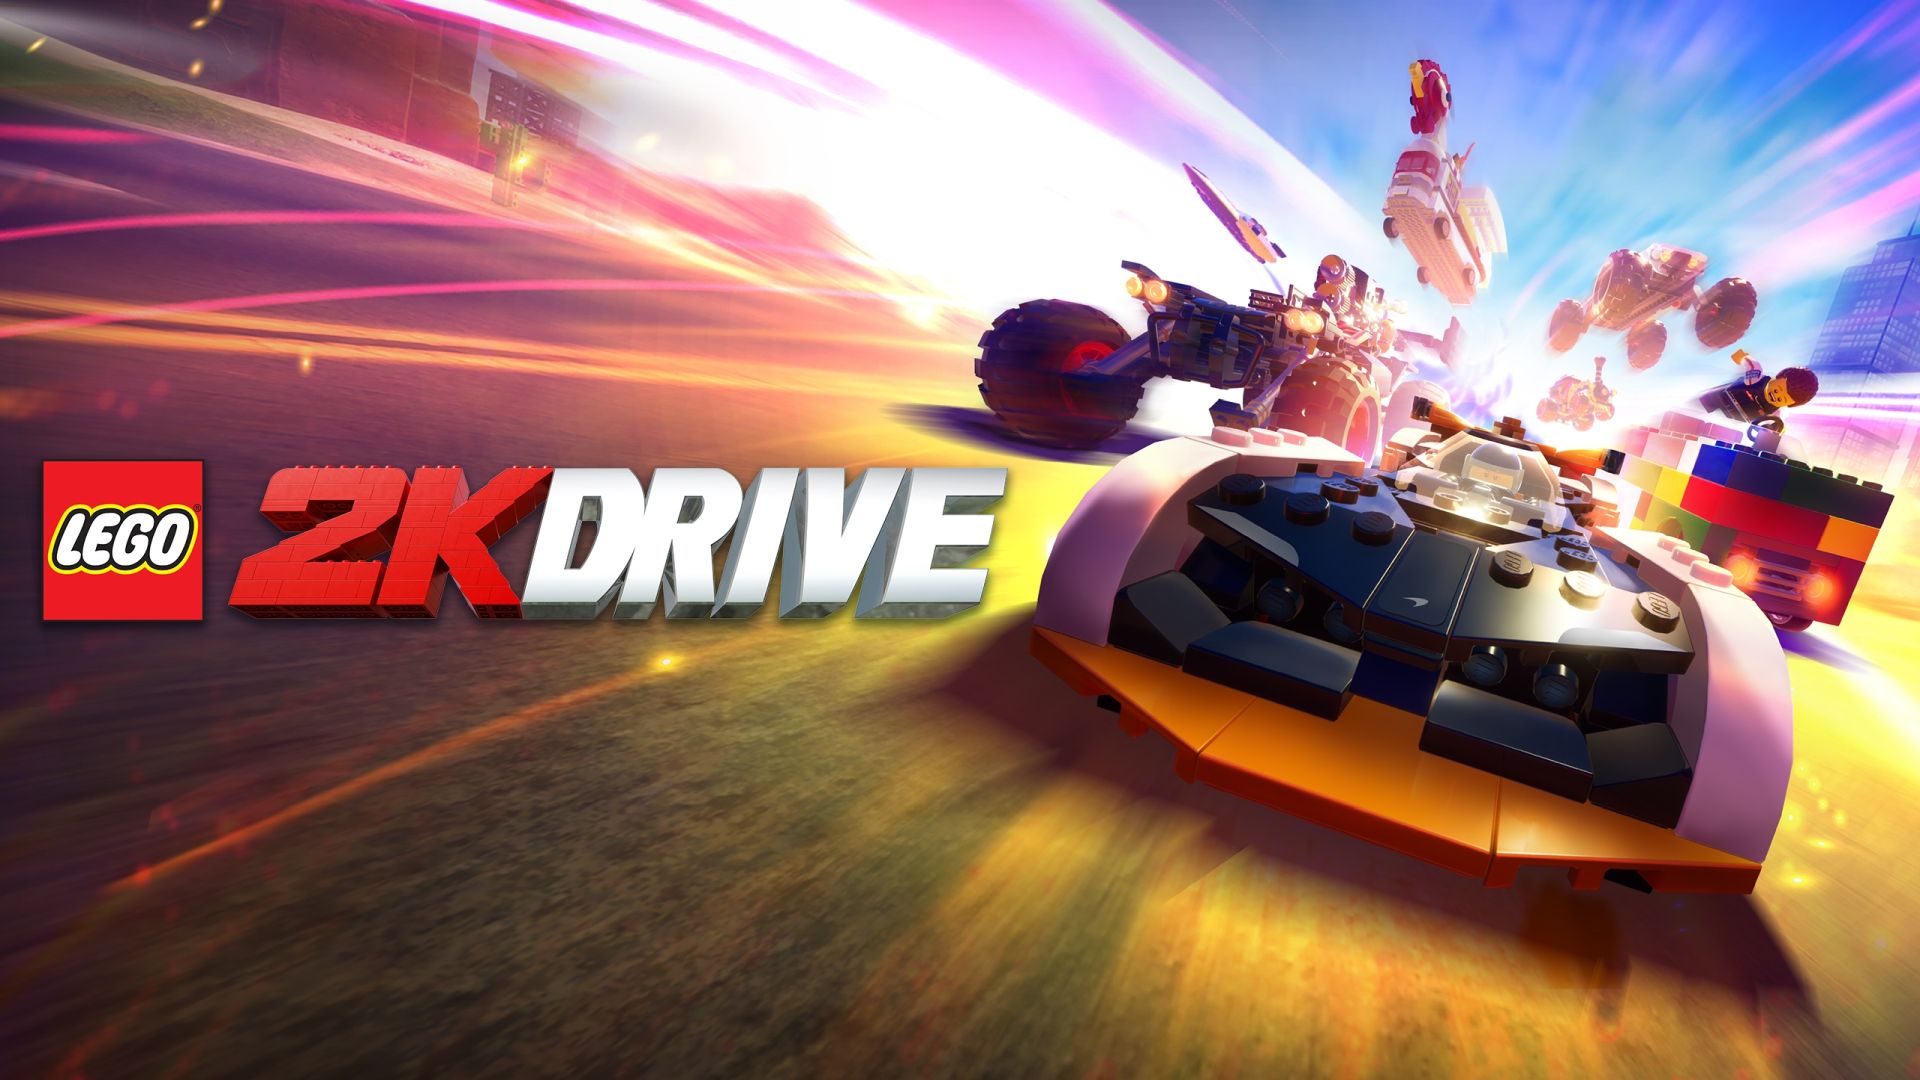 Video: LEGO 2k Drive launch trailer